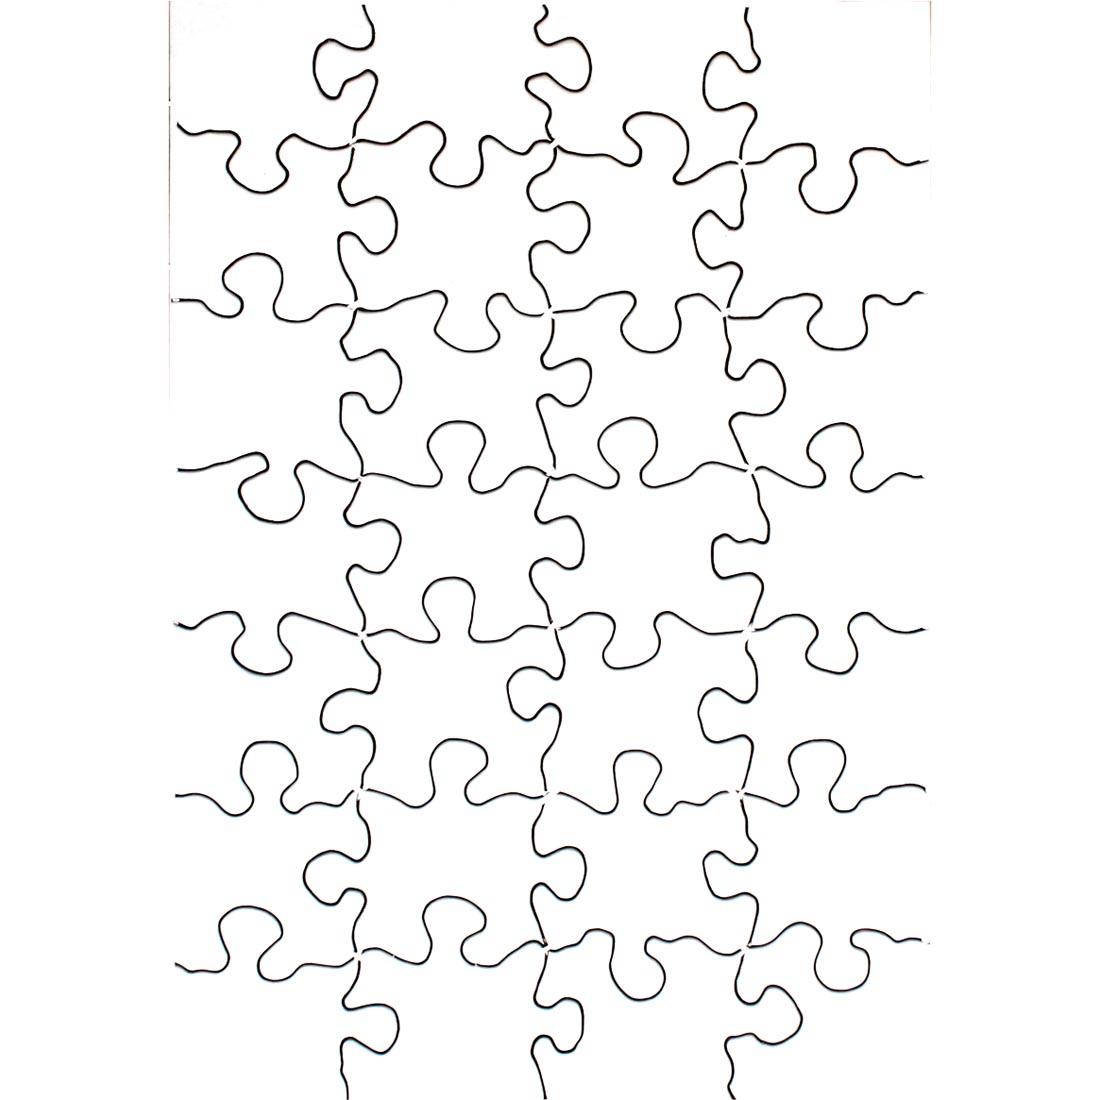 Blank Compoz-A-Puzzle 28-Piece Medium Rectangle